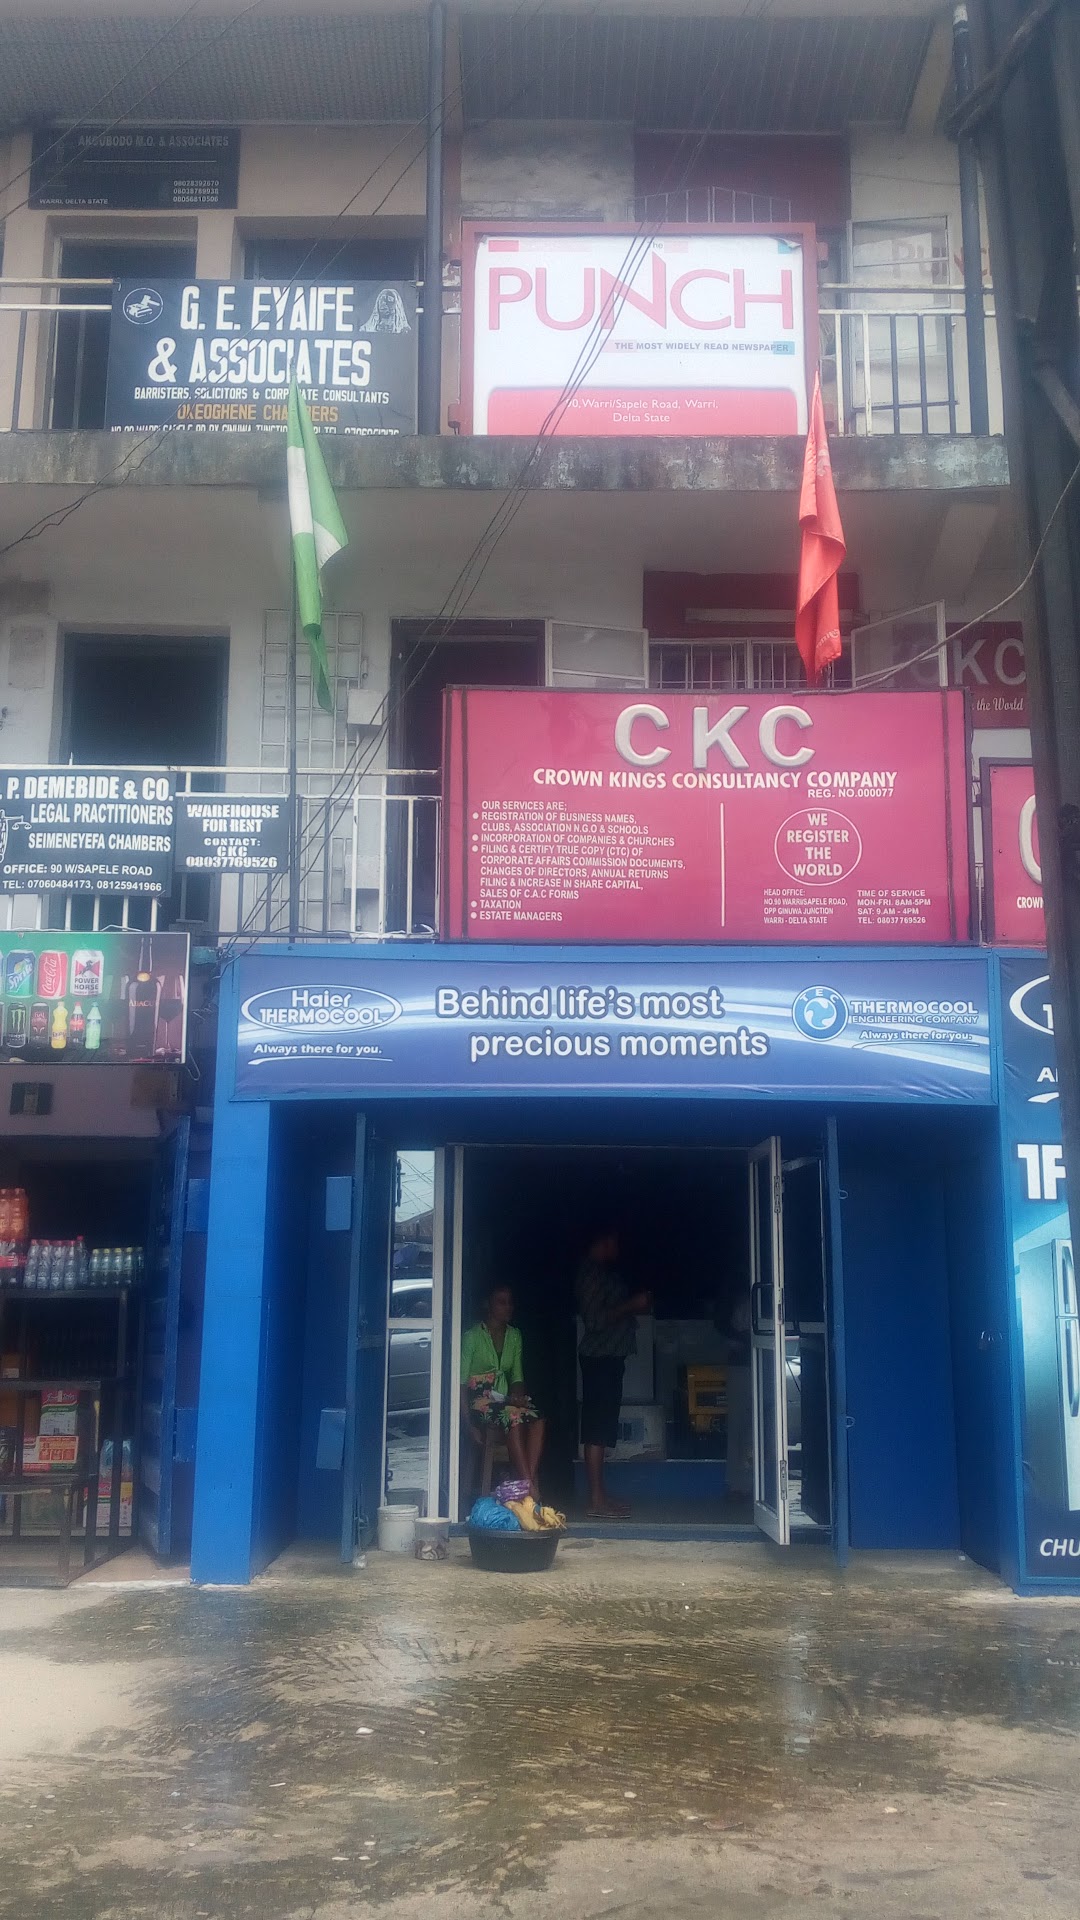 Crown Kings Consultancy Company. Ckc